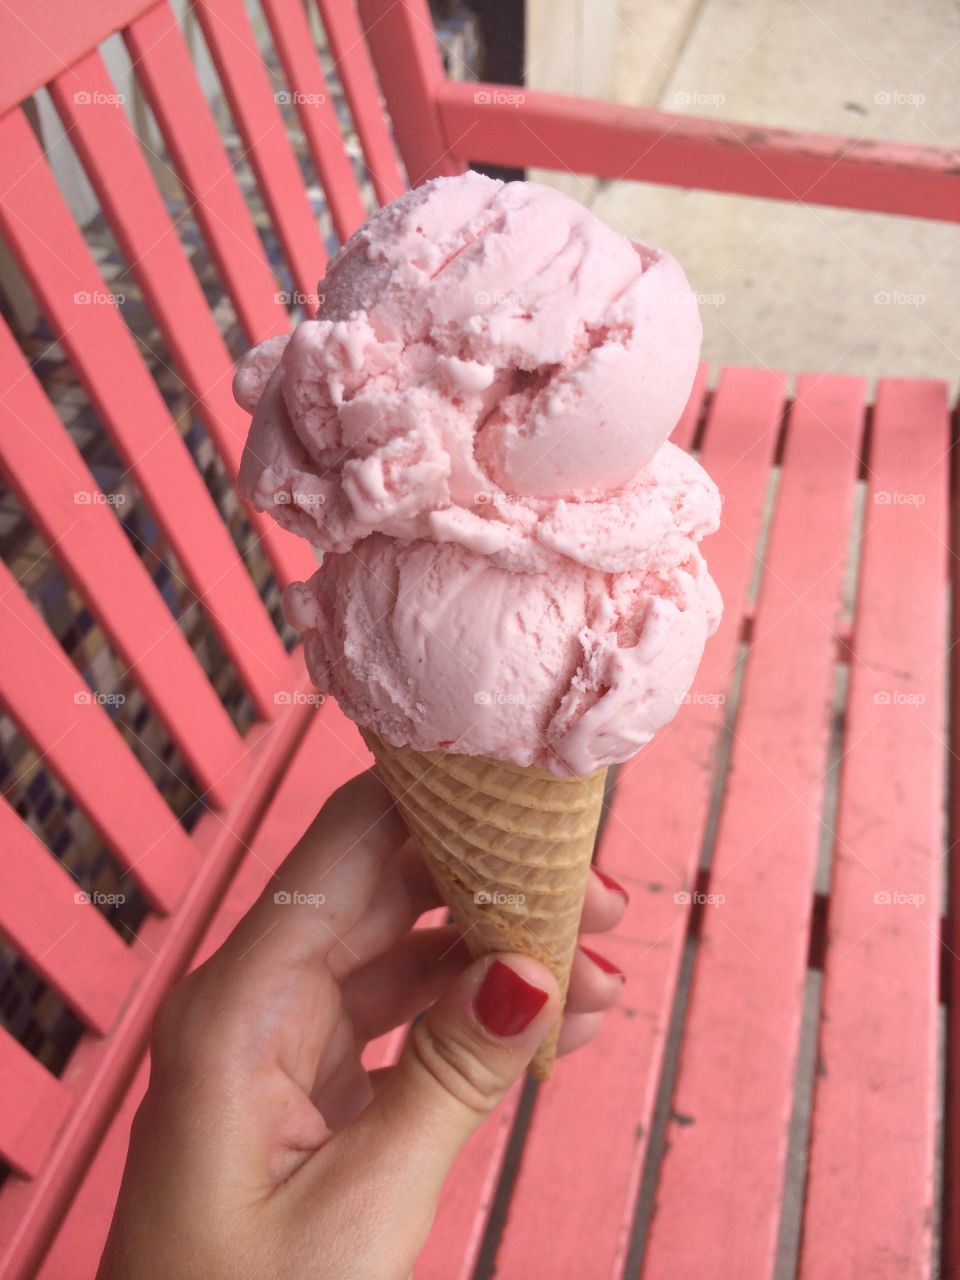 Pretty in Pink 1. Taken at Bobtail Ice Cream in Chicago 